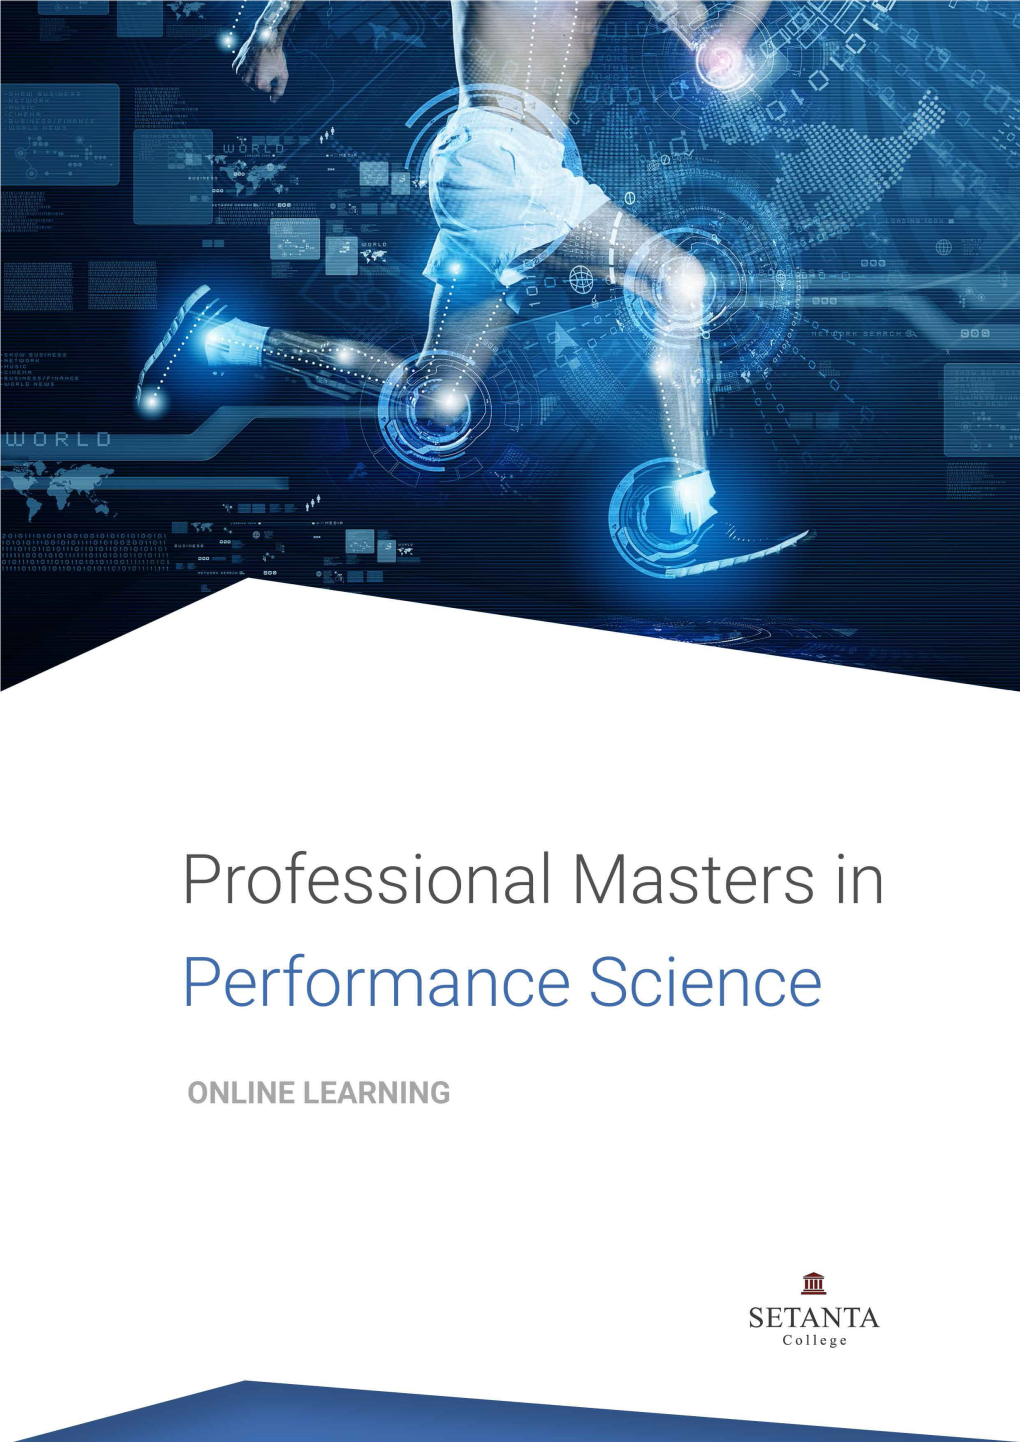 Professional Masters Brochure